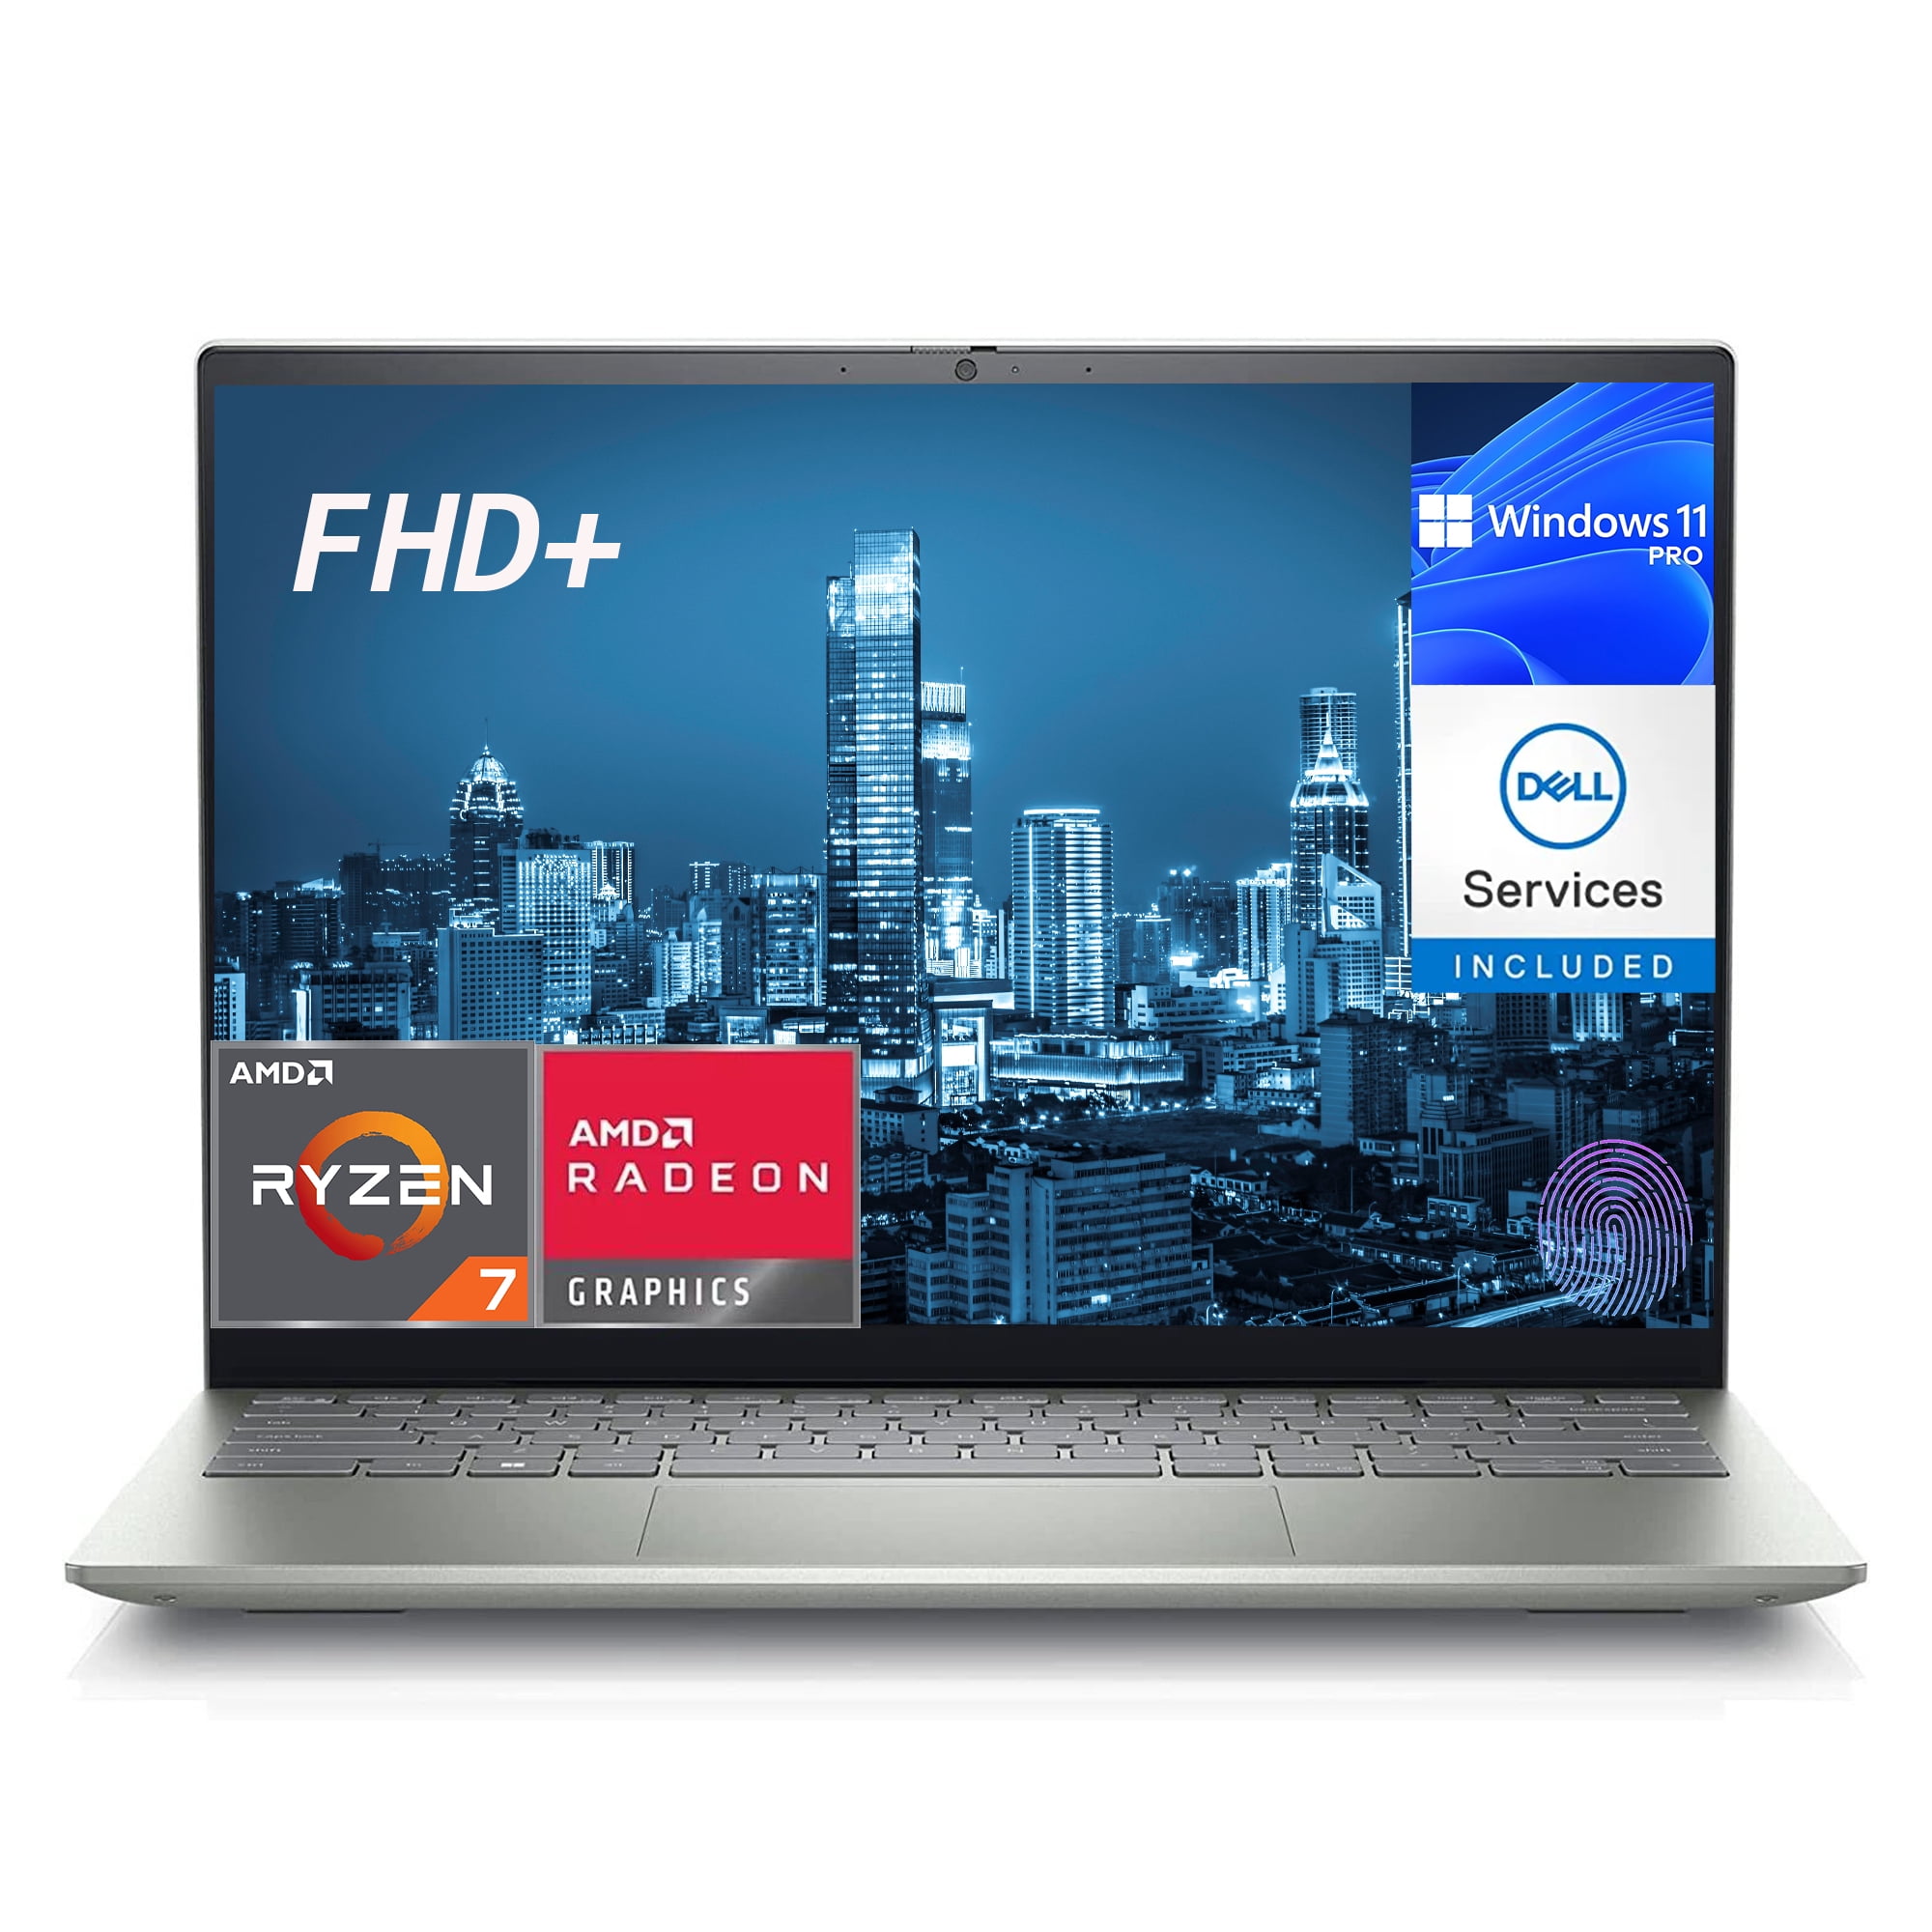 [Windows 11 Pro]Dell Inspiron 14 5425 Business Laptop Computer, 14